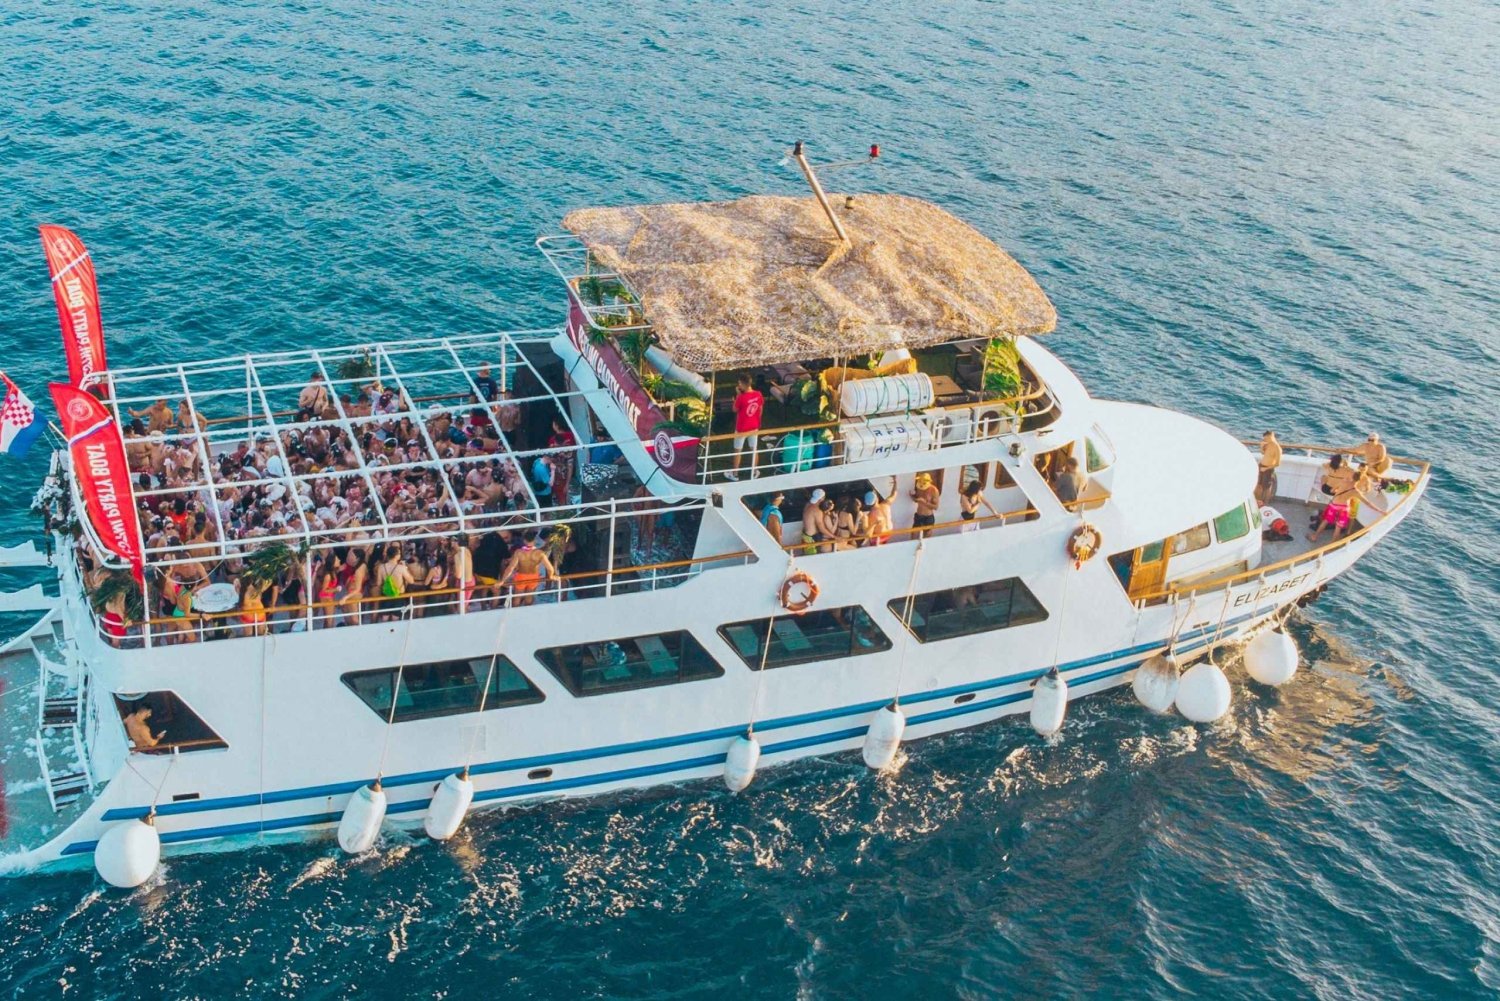 Zrće, Island Pag: Zrće Party Boat - Festini (all inclusive)